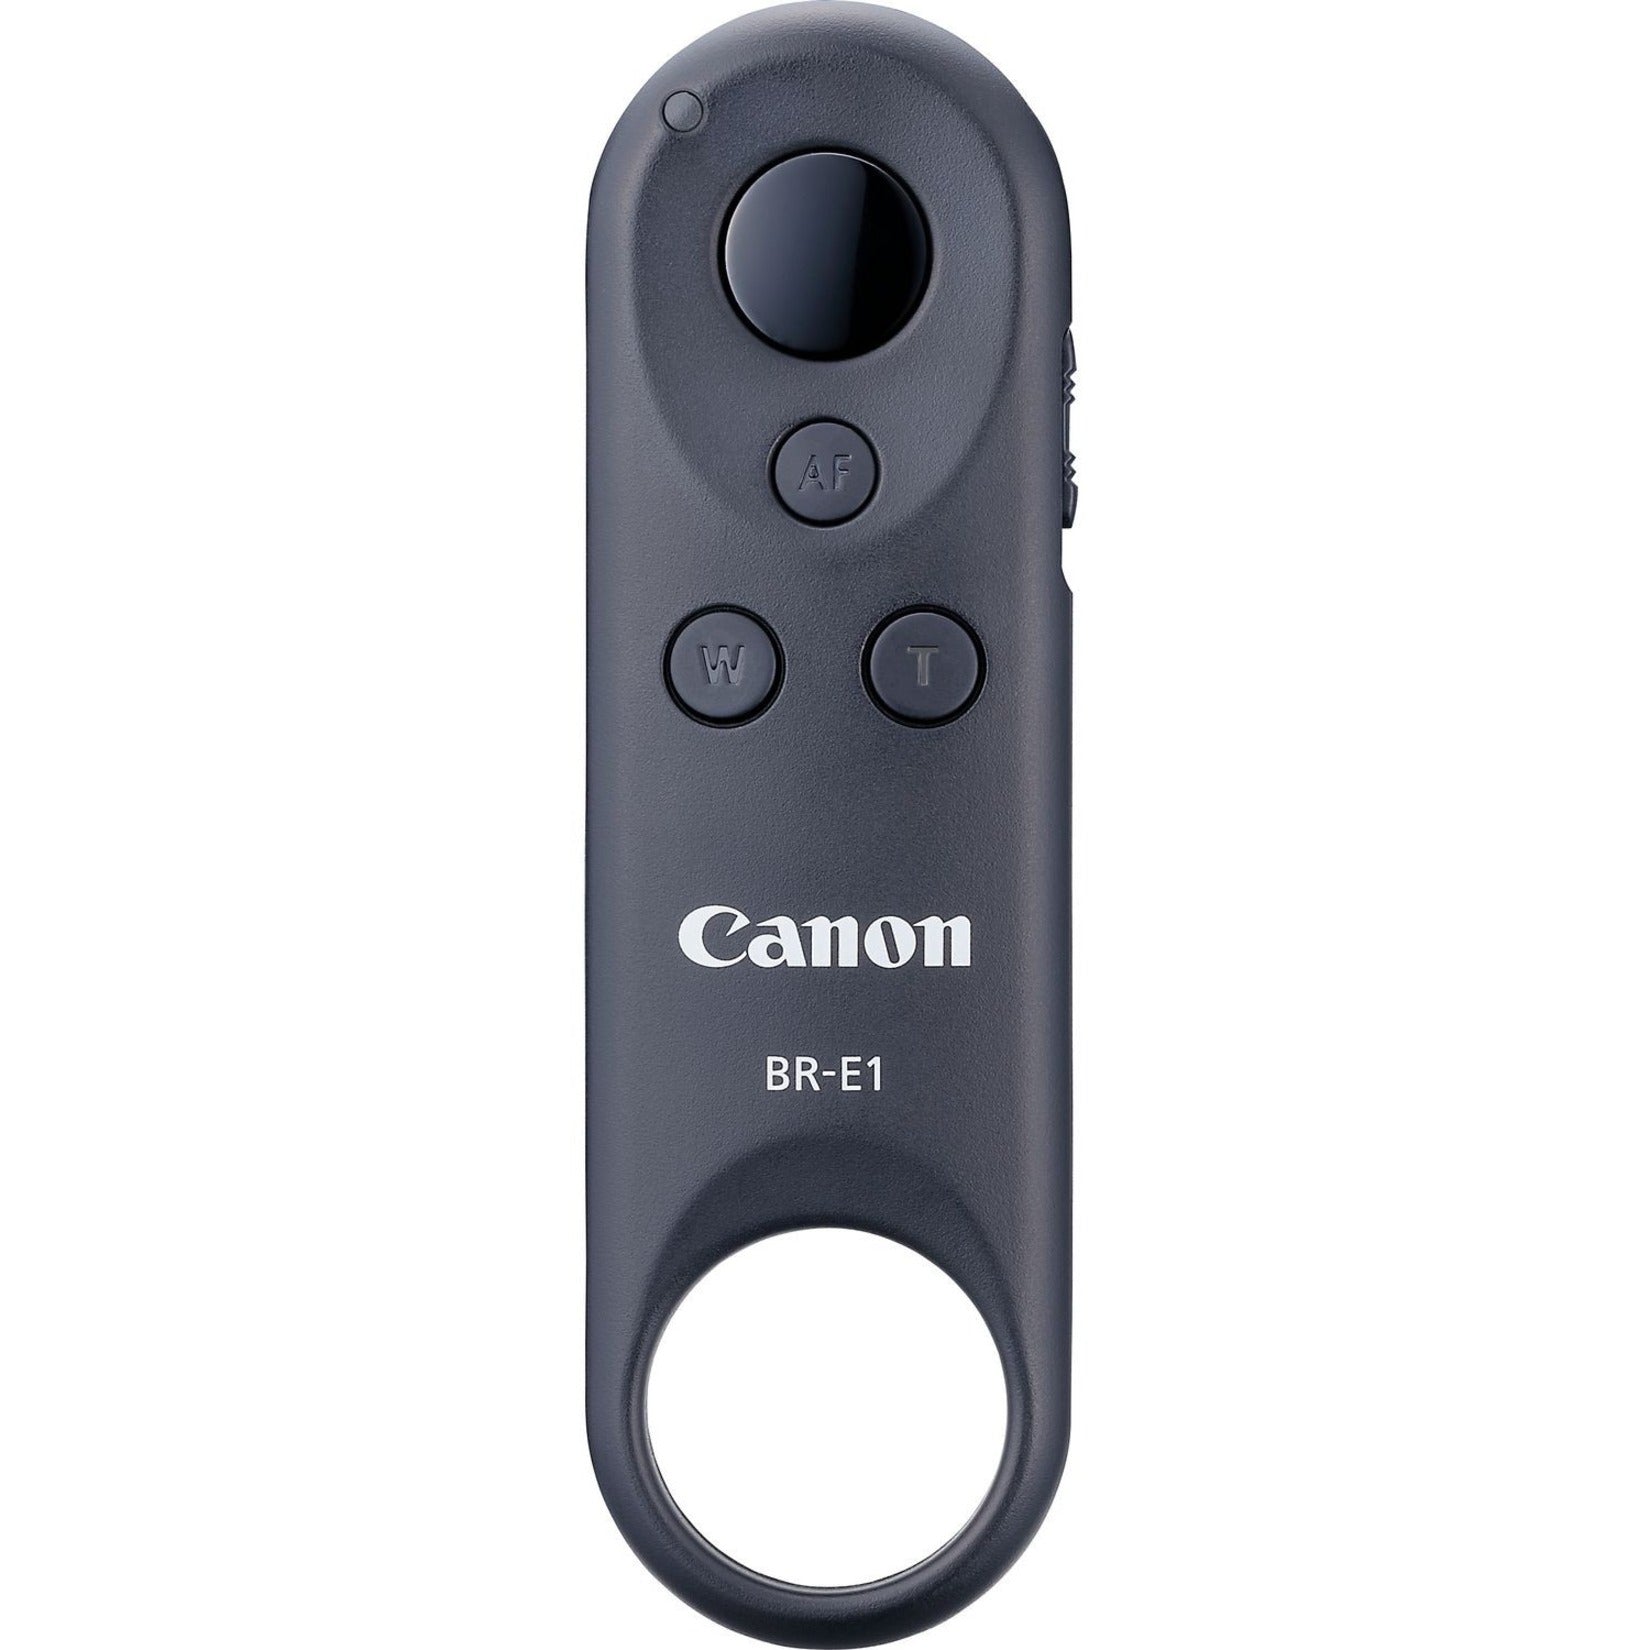 Canon 2140C001 Wireless Remote Control BR-E1, Compatible with Canon Cameras, Bluetooth Technology